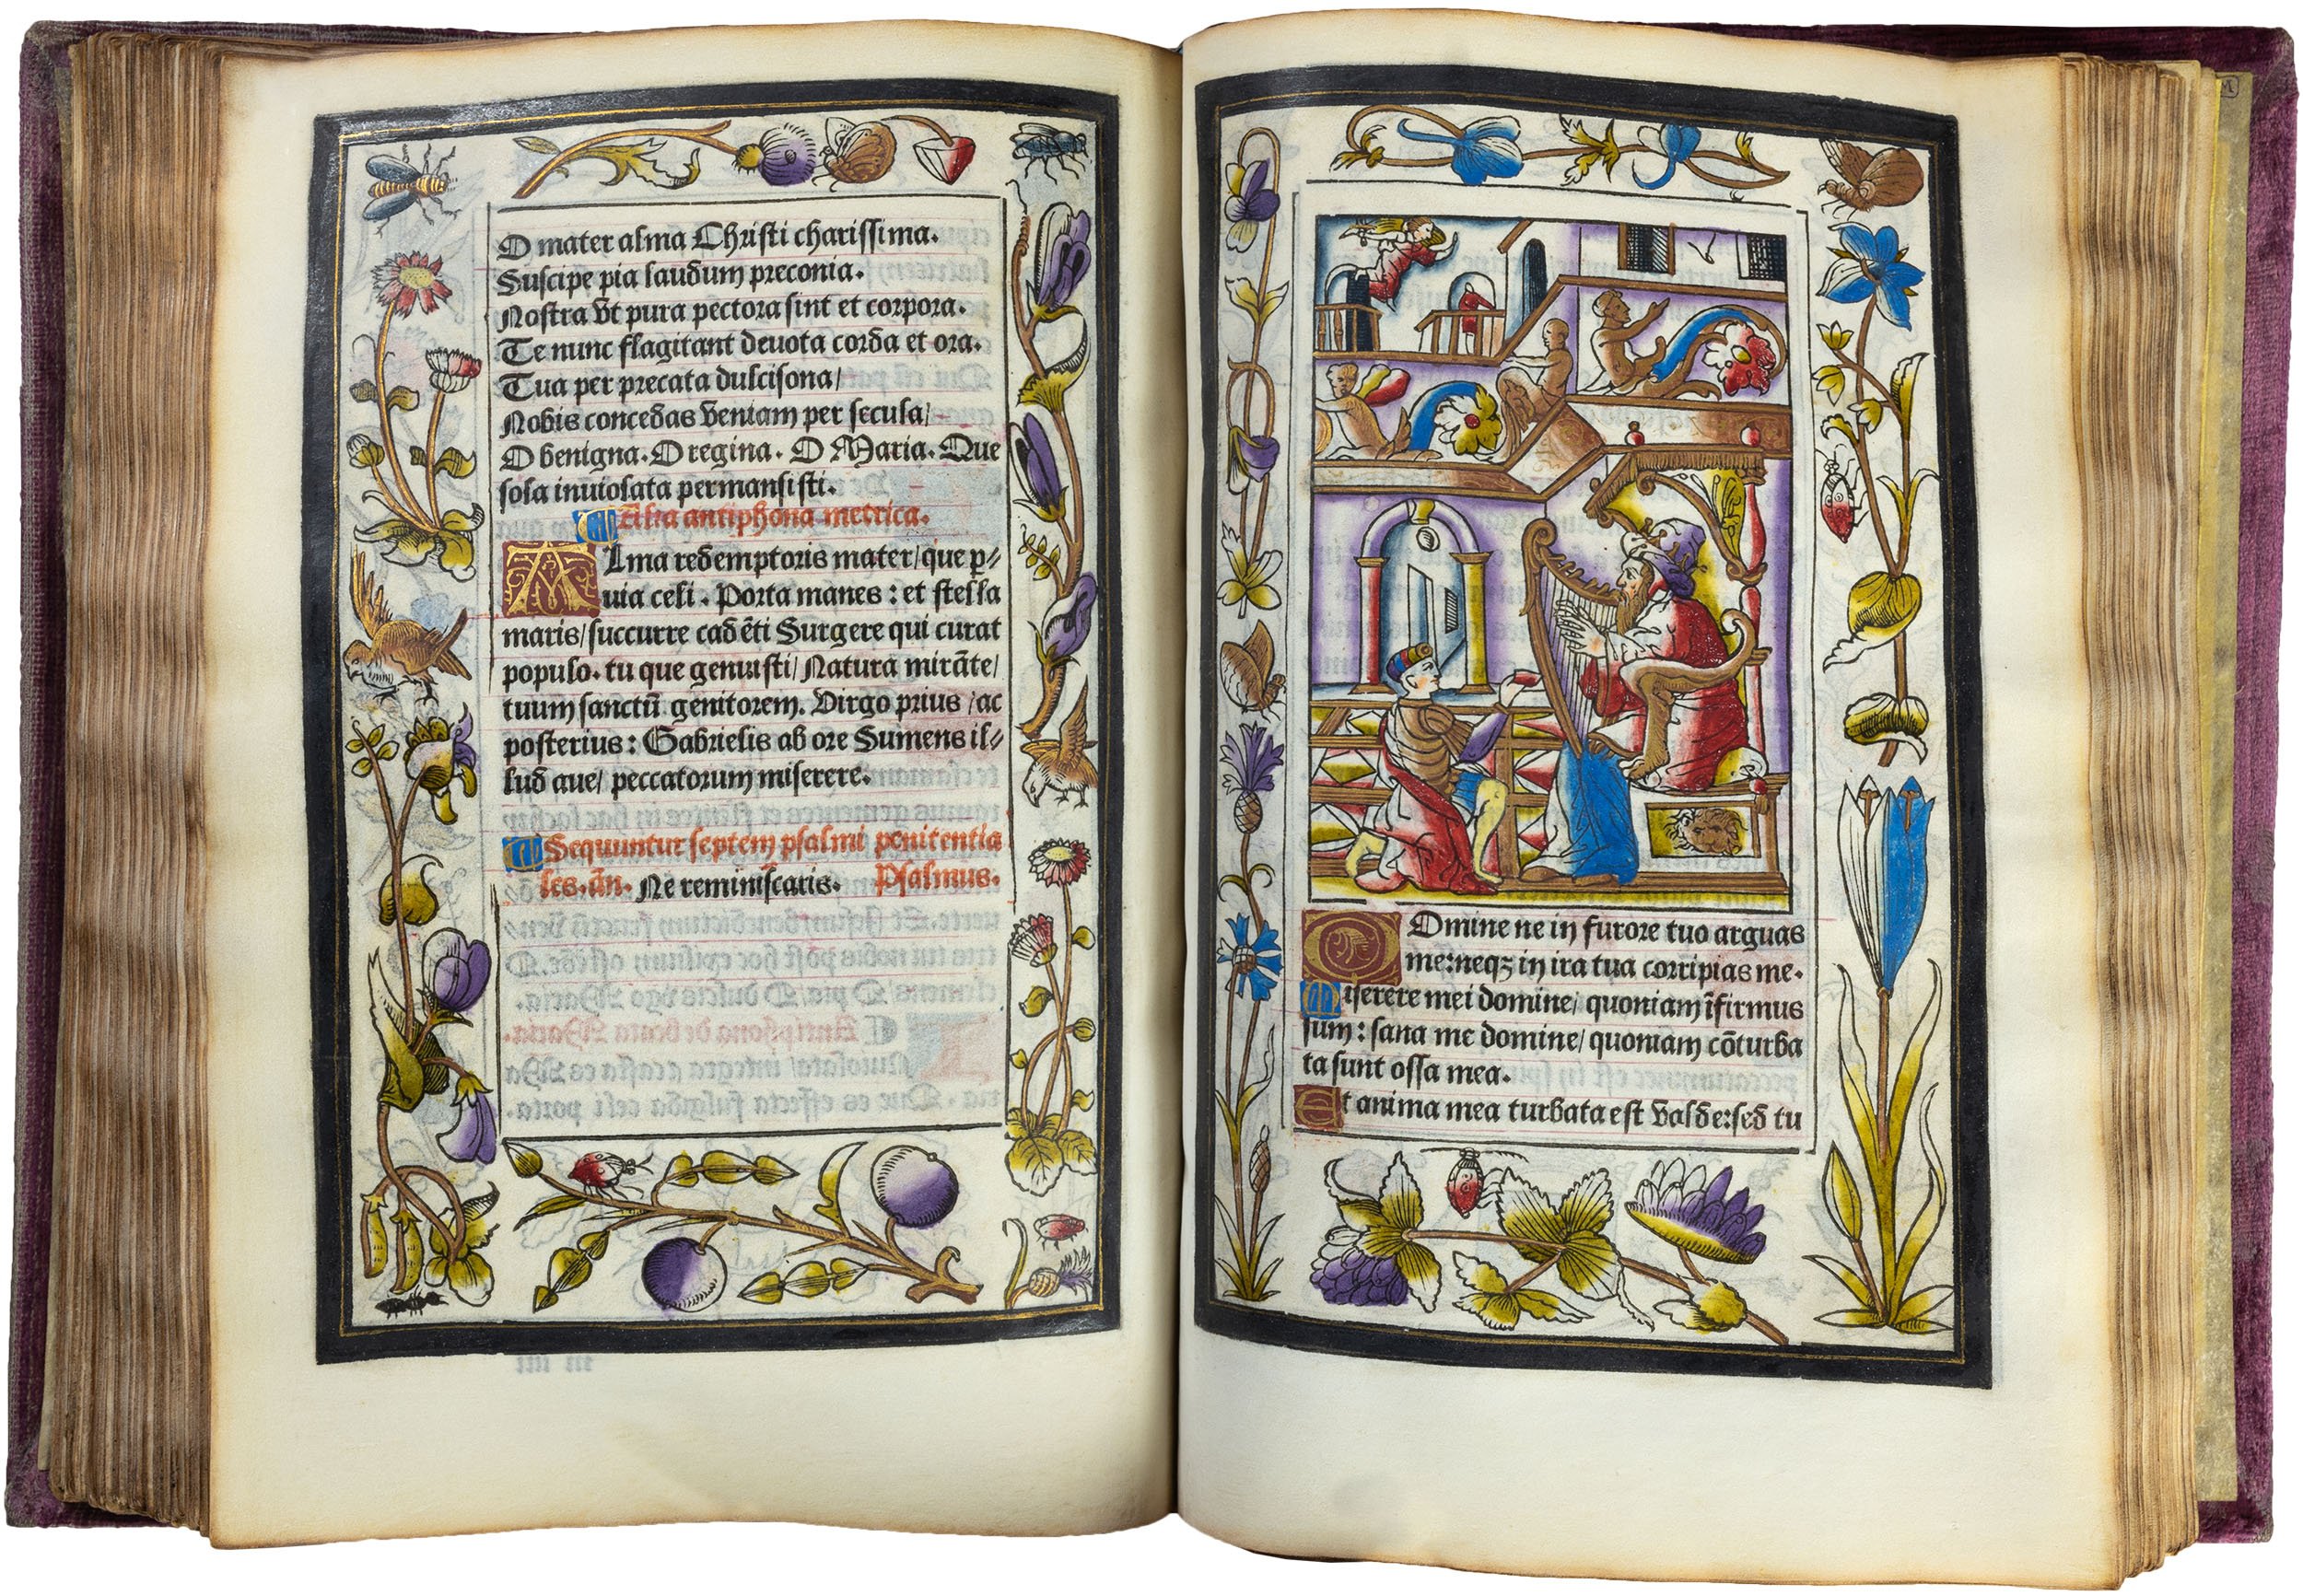 geoffroy-tory-printed-book-of-hours-illuminated-vellum-22-october-1527-prince-dessing-villeneuve-horae-bmv-94.jpg